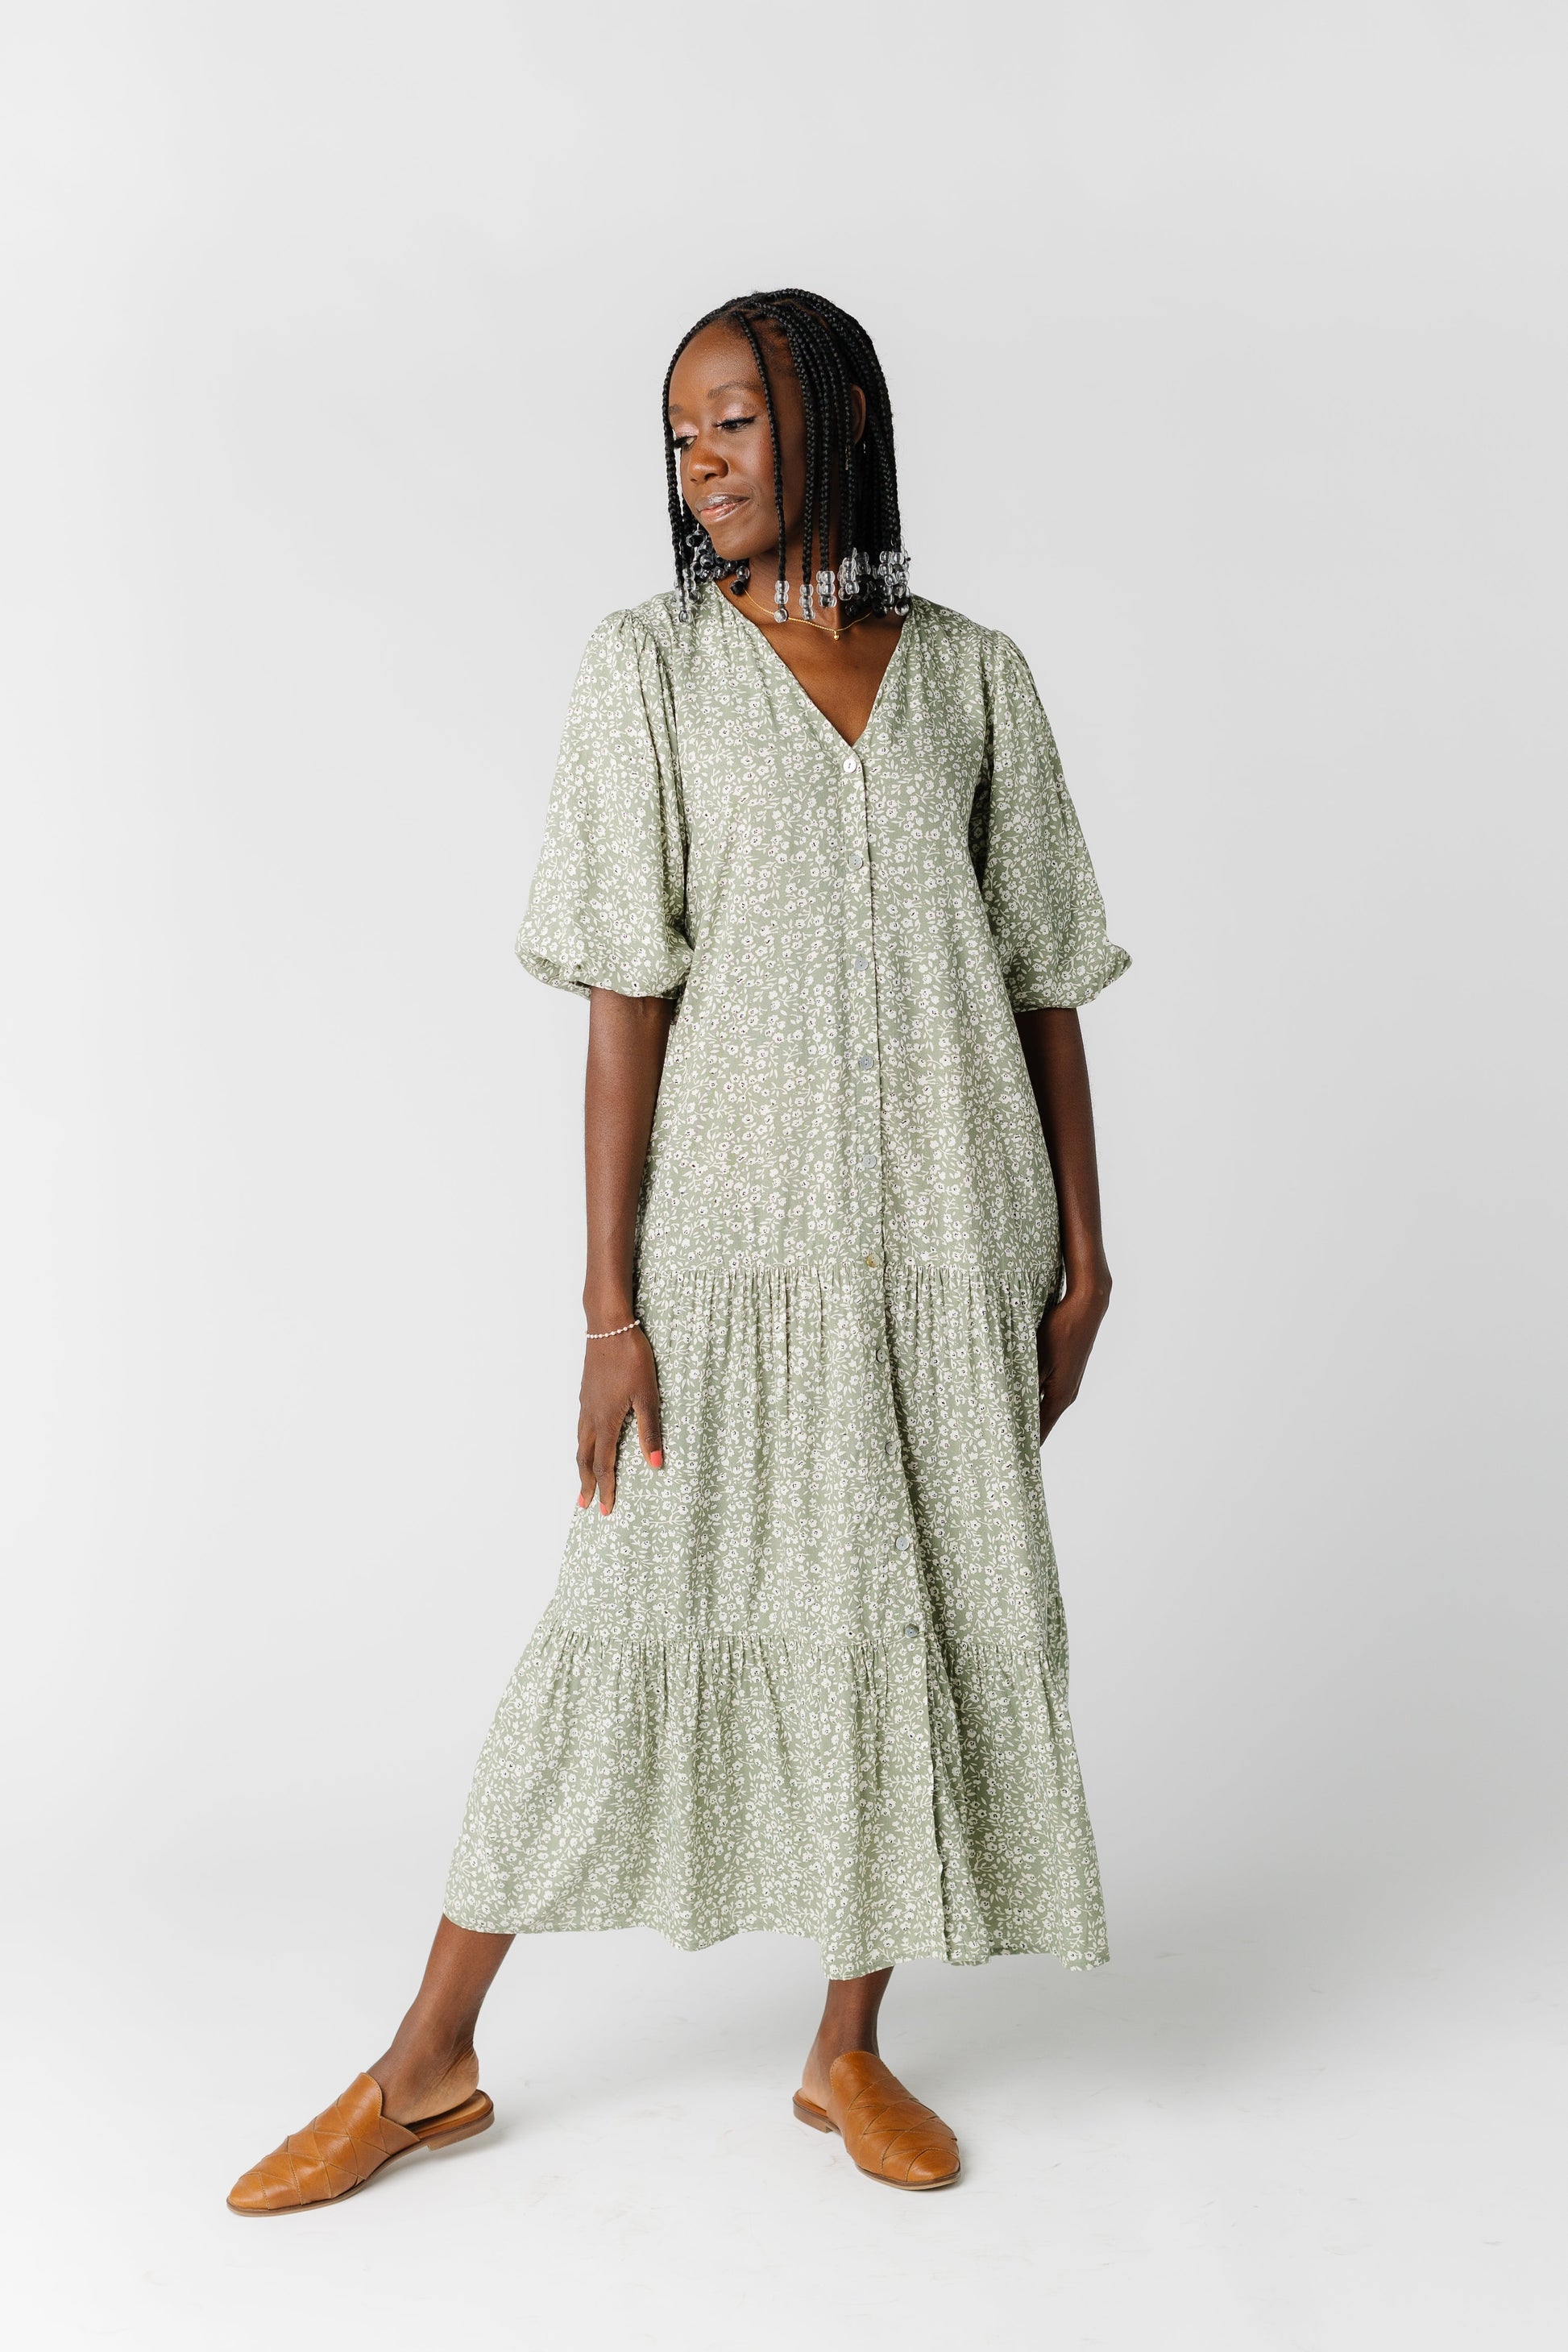 Citrus Laura Dress WOMEN'S DRESS Citrus Green Print XS 